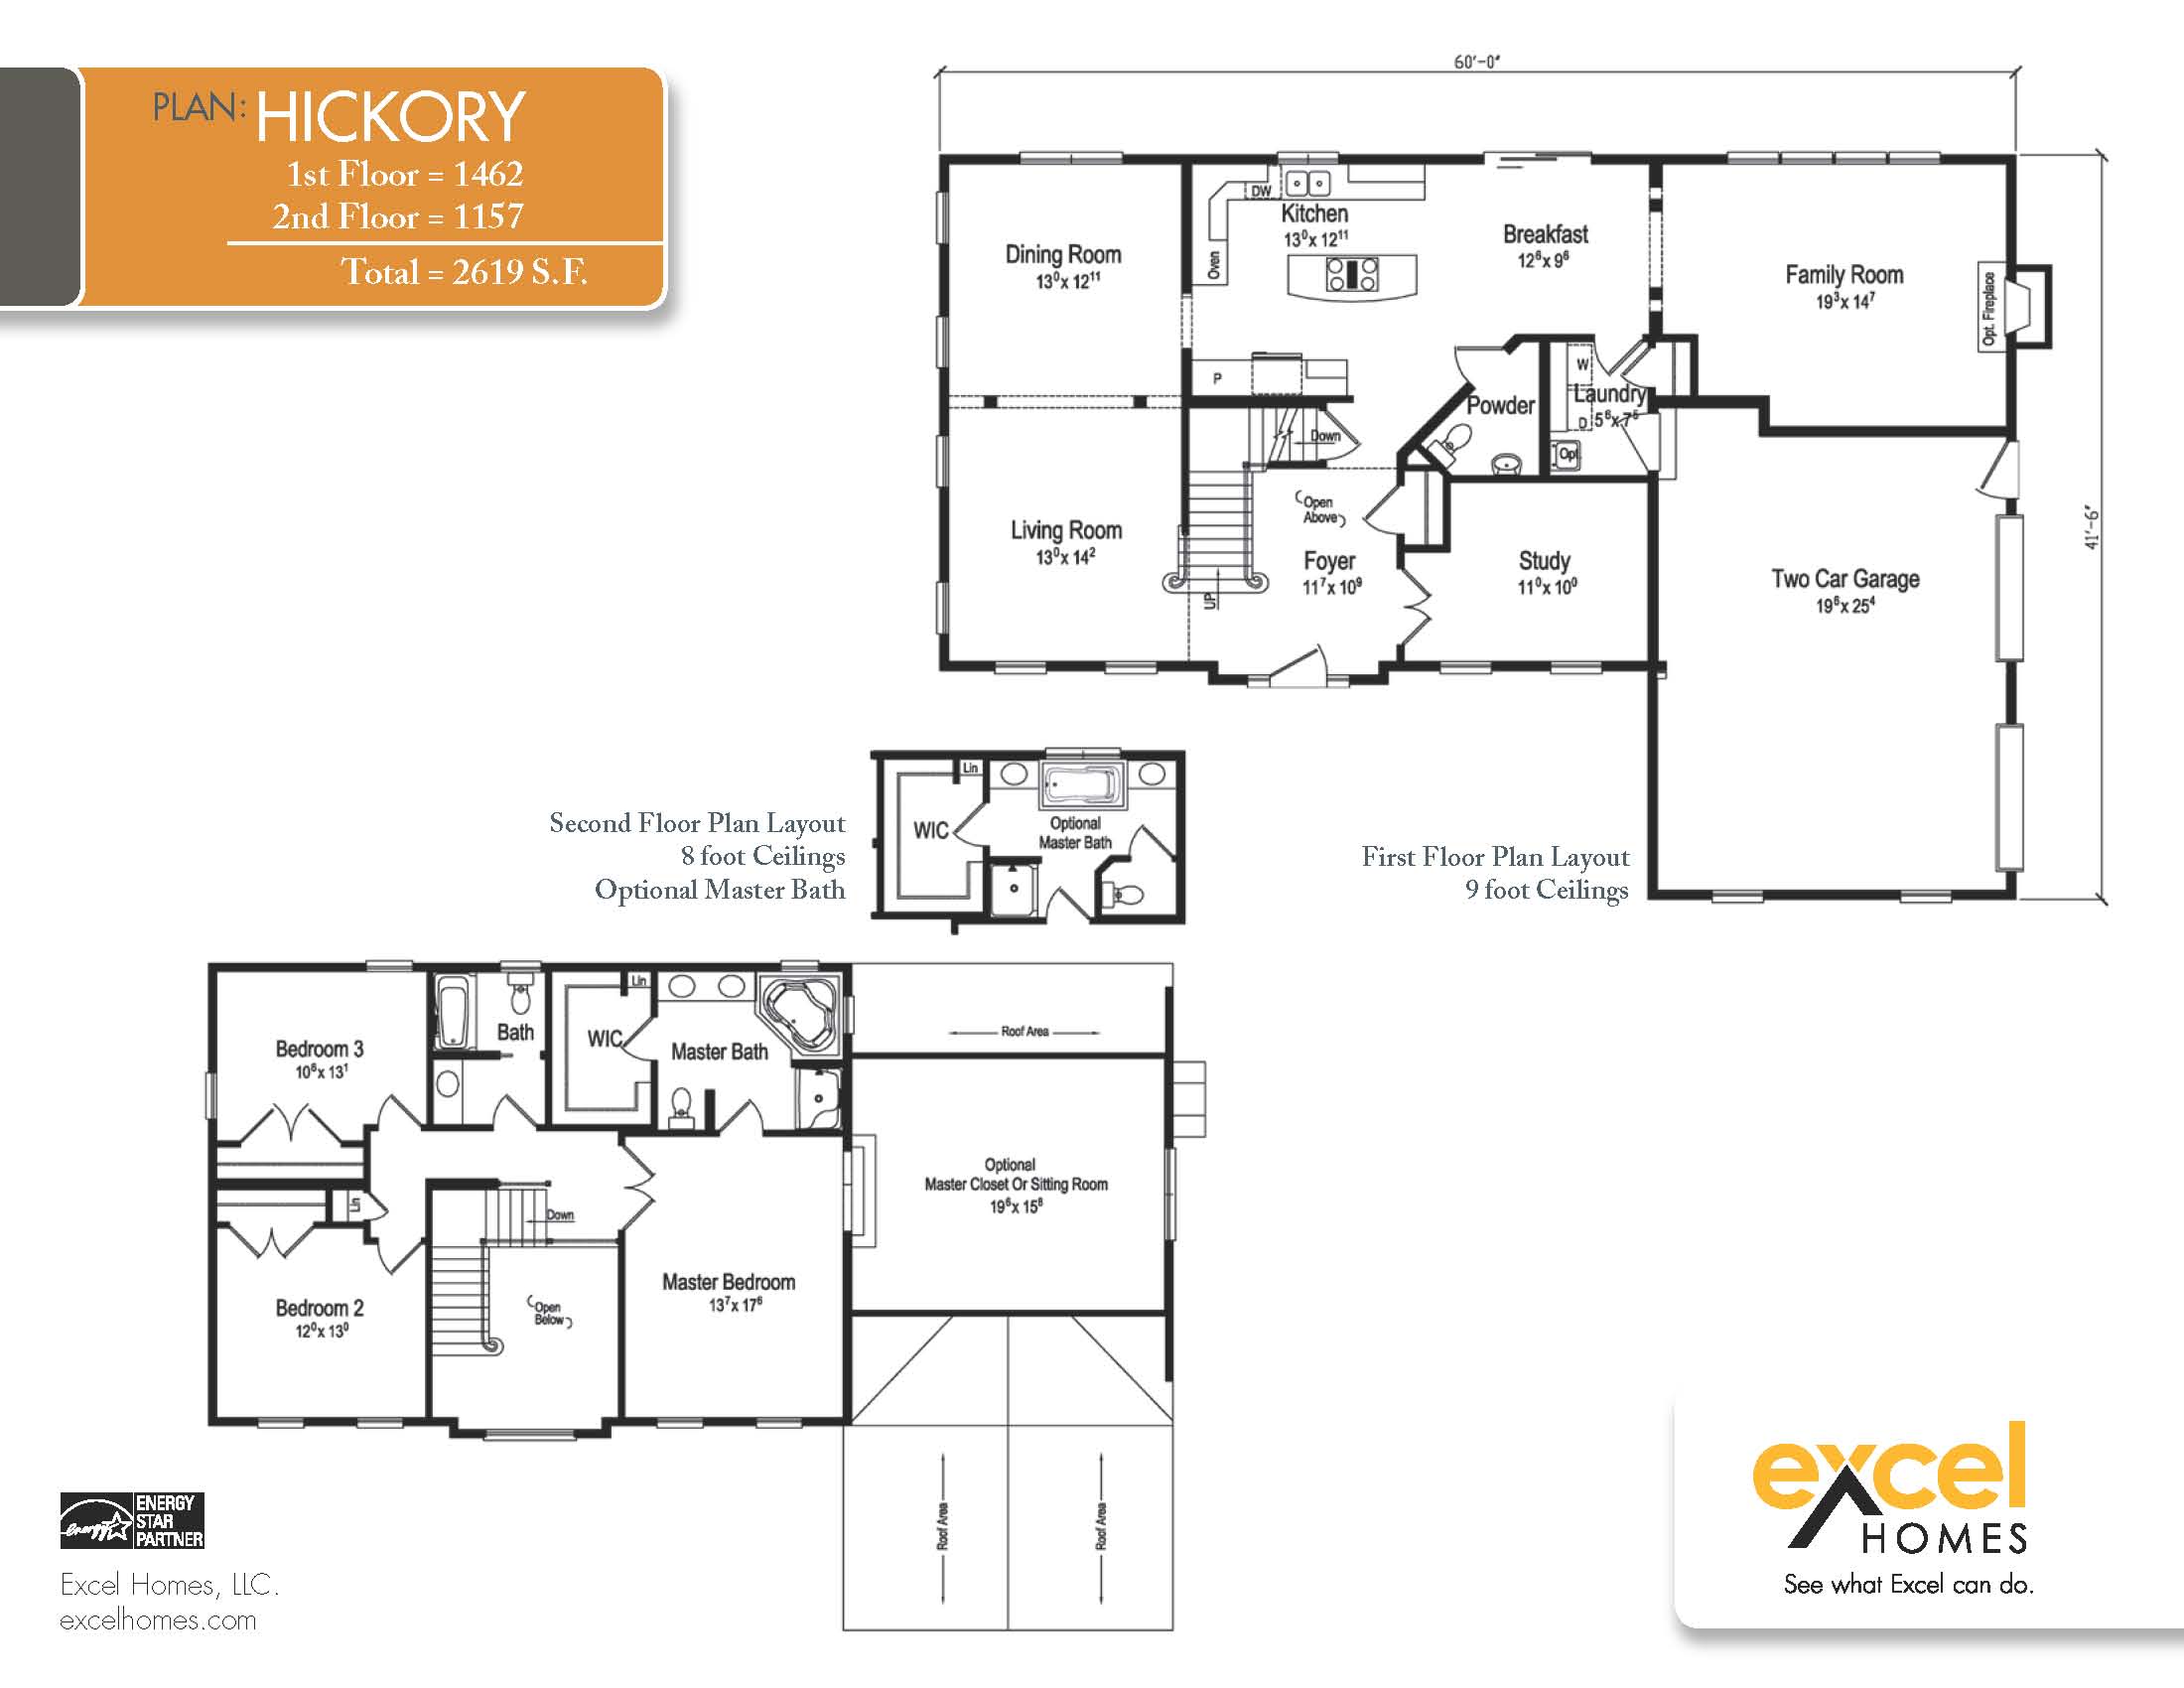 Hickory Donaway Homes Modular Home The Hickory Floorplan